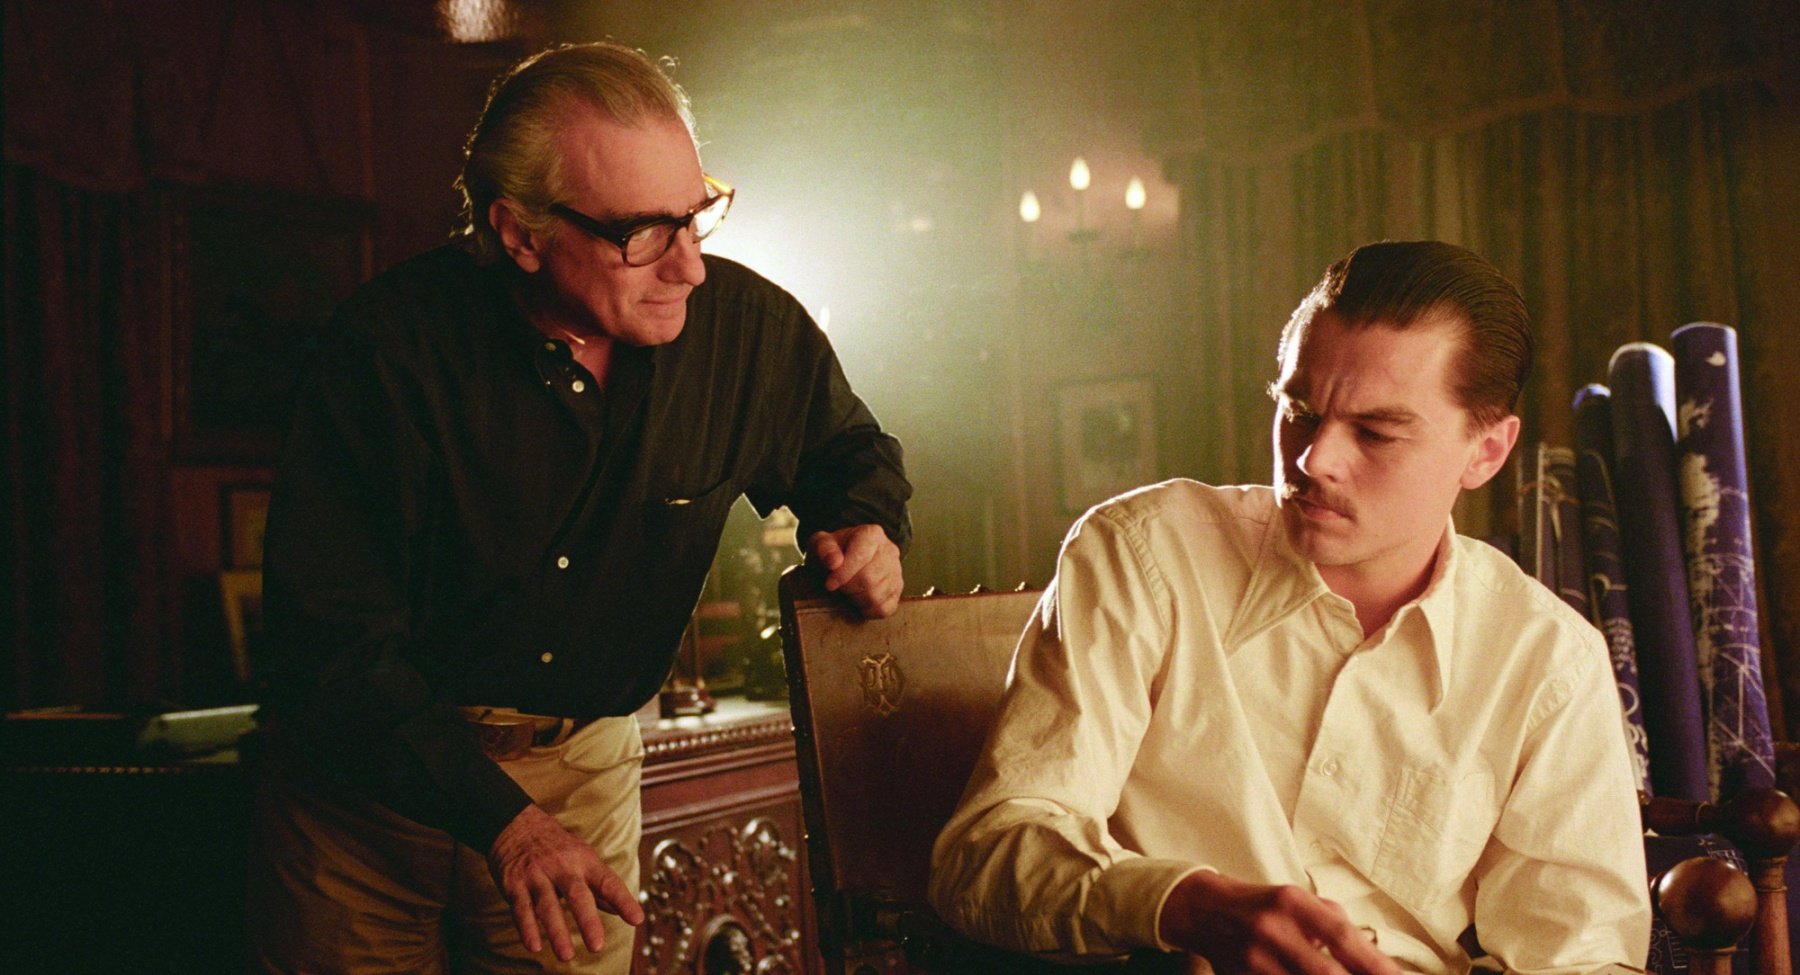 Martin Scorsese et Leonardo DiCaprio dans les coulisses du tournage du film 